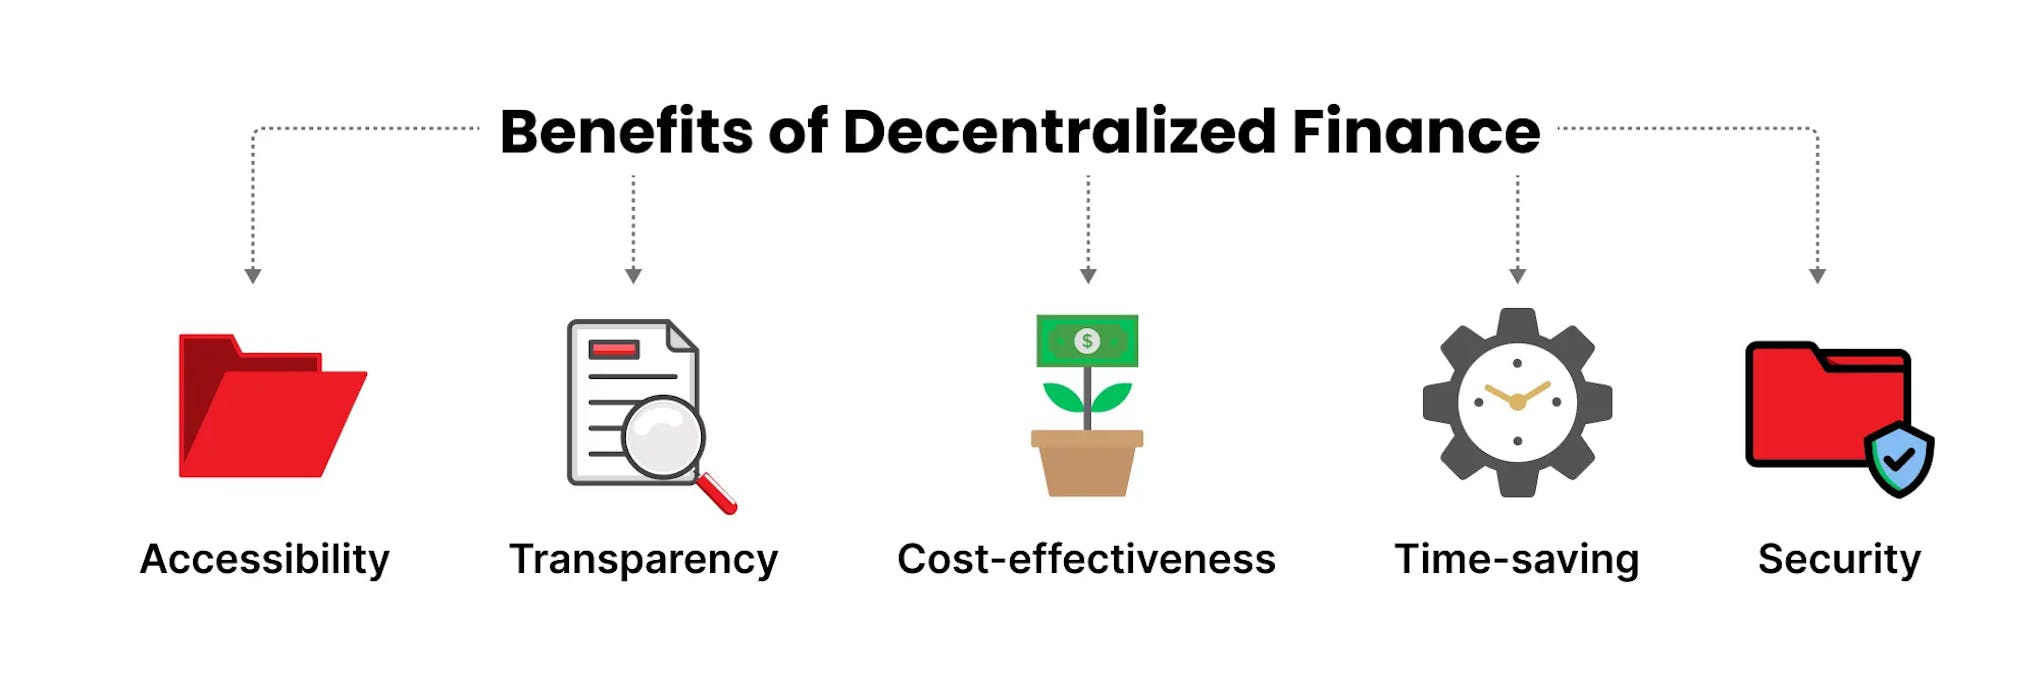 Benefits of Decentralized Finance